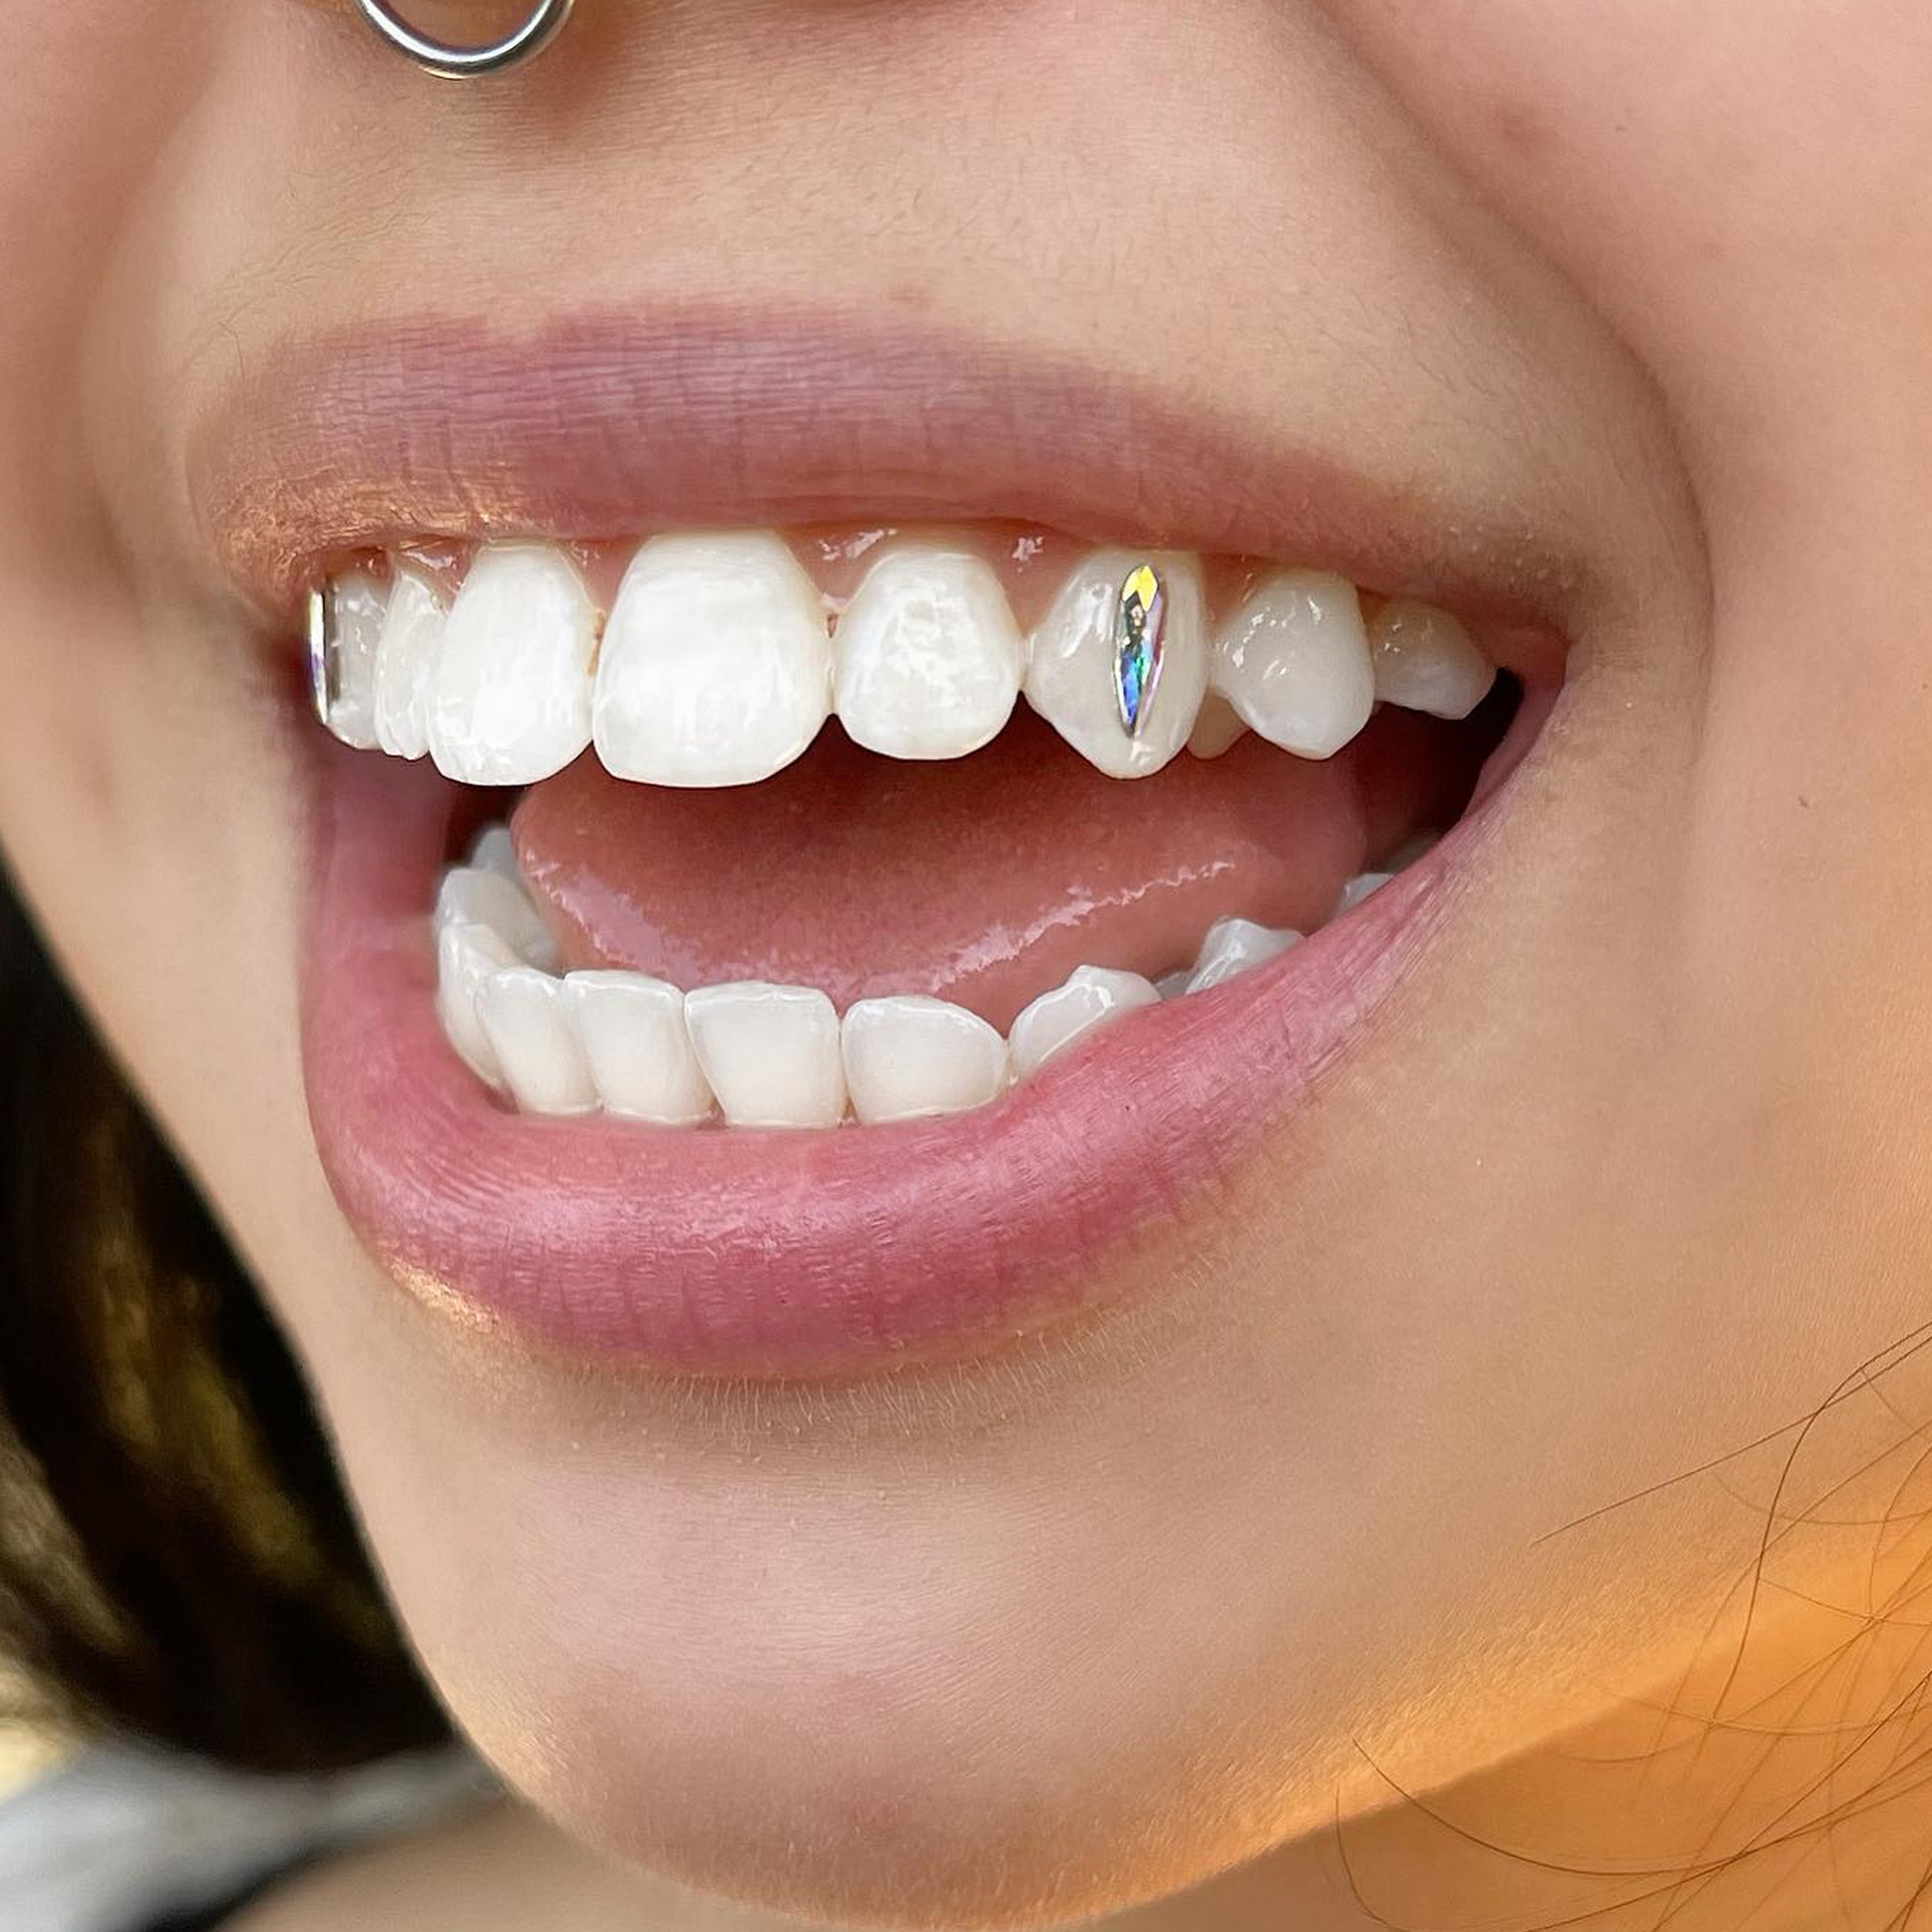 RUSR DIY Tooth Gem Jewelry Kit Diamond Teeth Decoration Teeth Ornament  Application,4pcs 